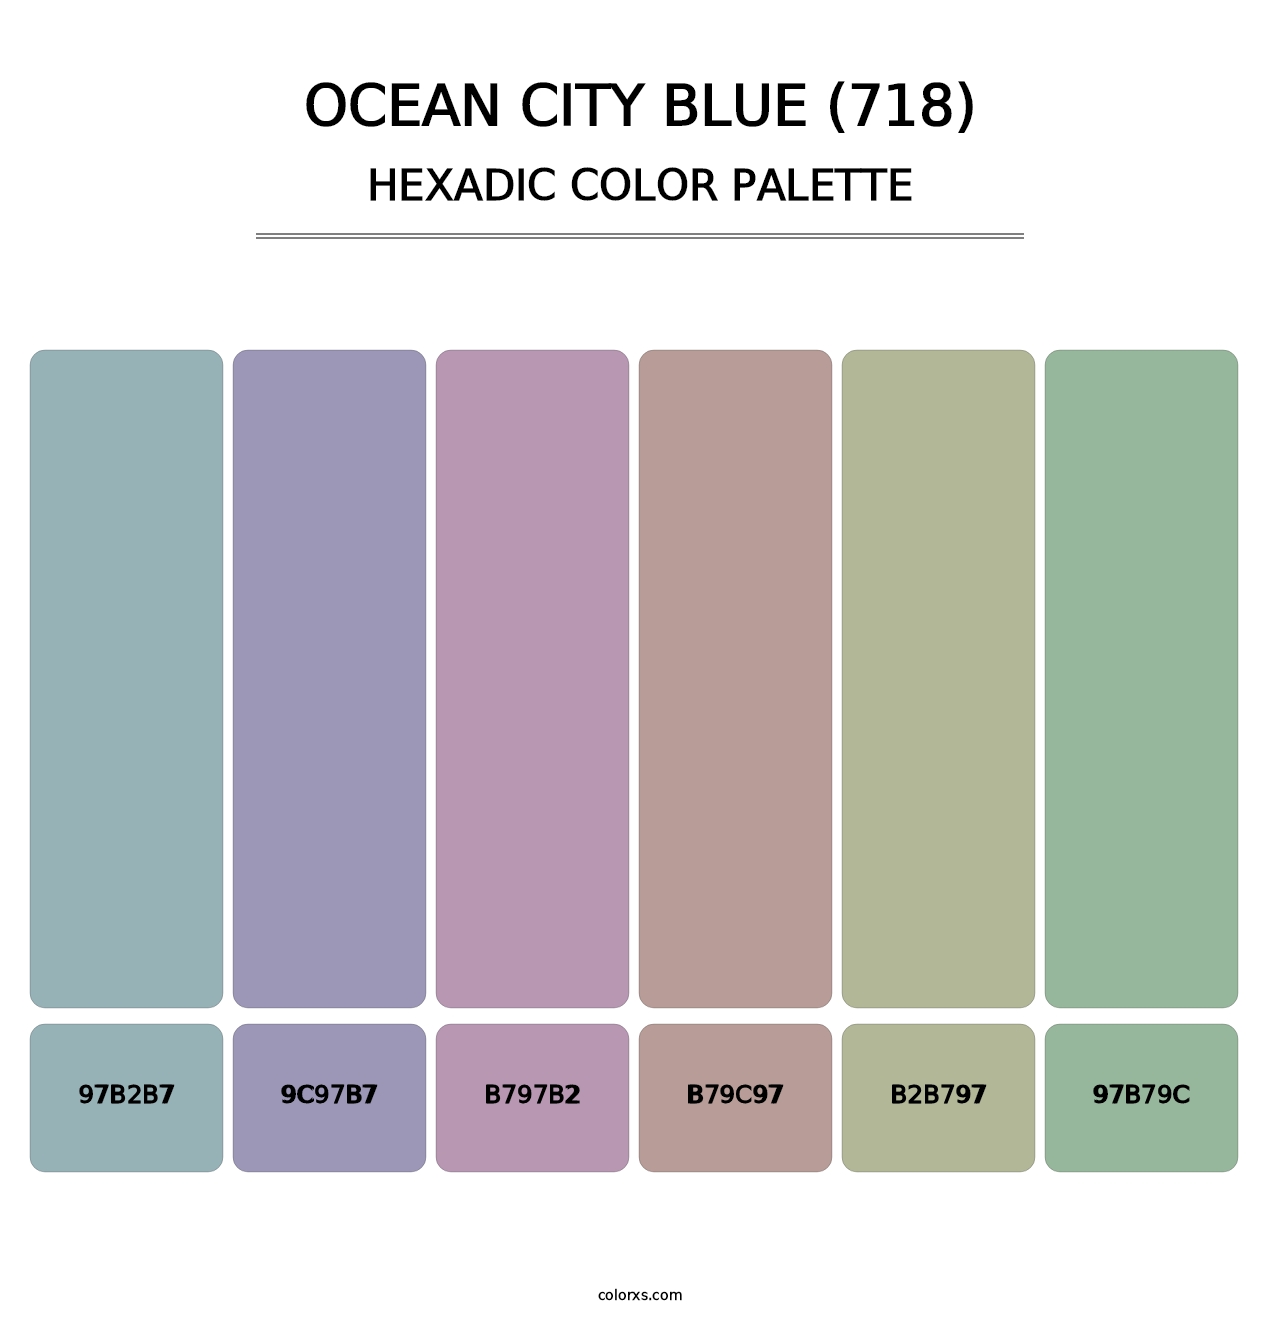 Ocean City Blue (718) - Hexadic Color Palette